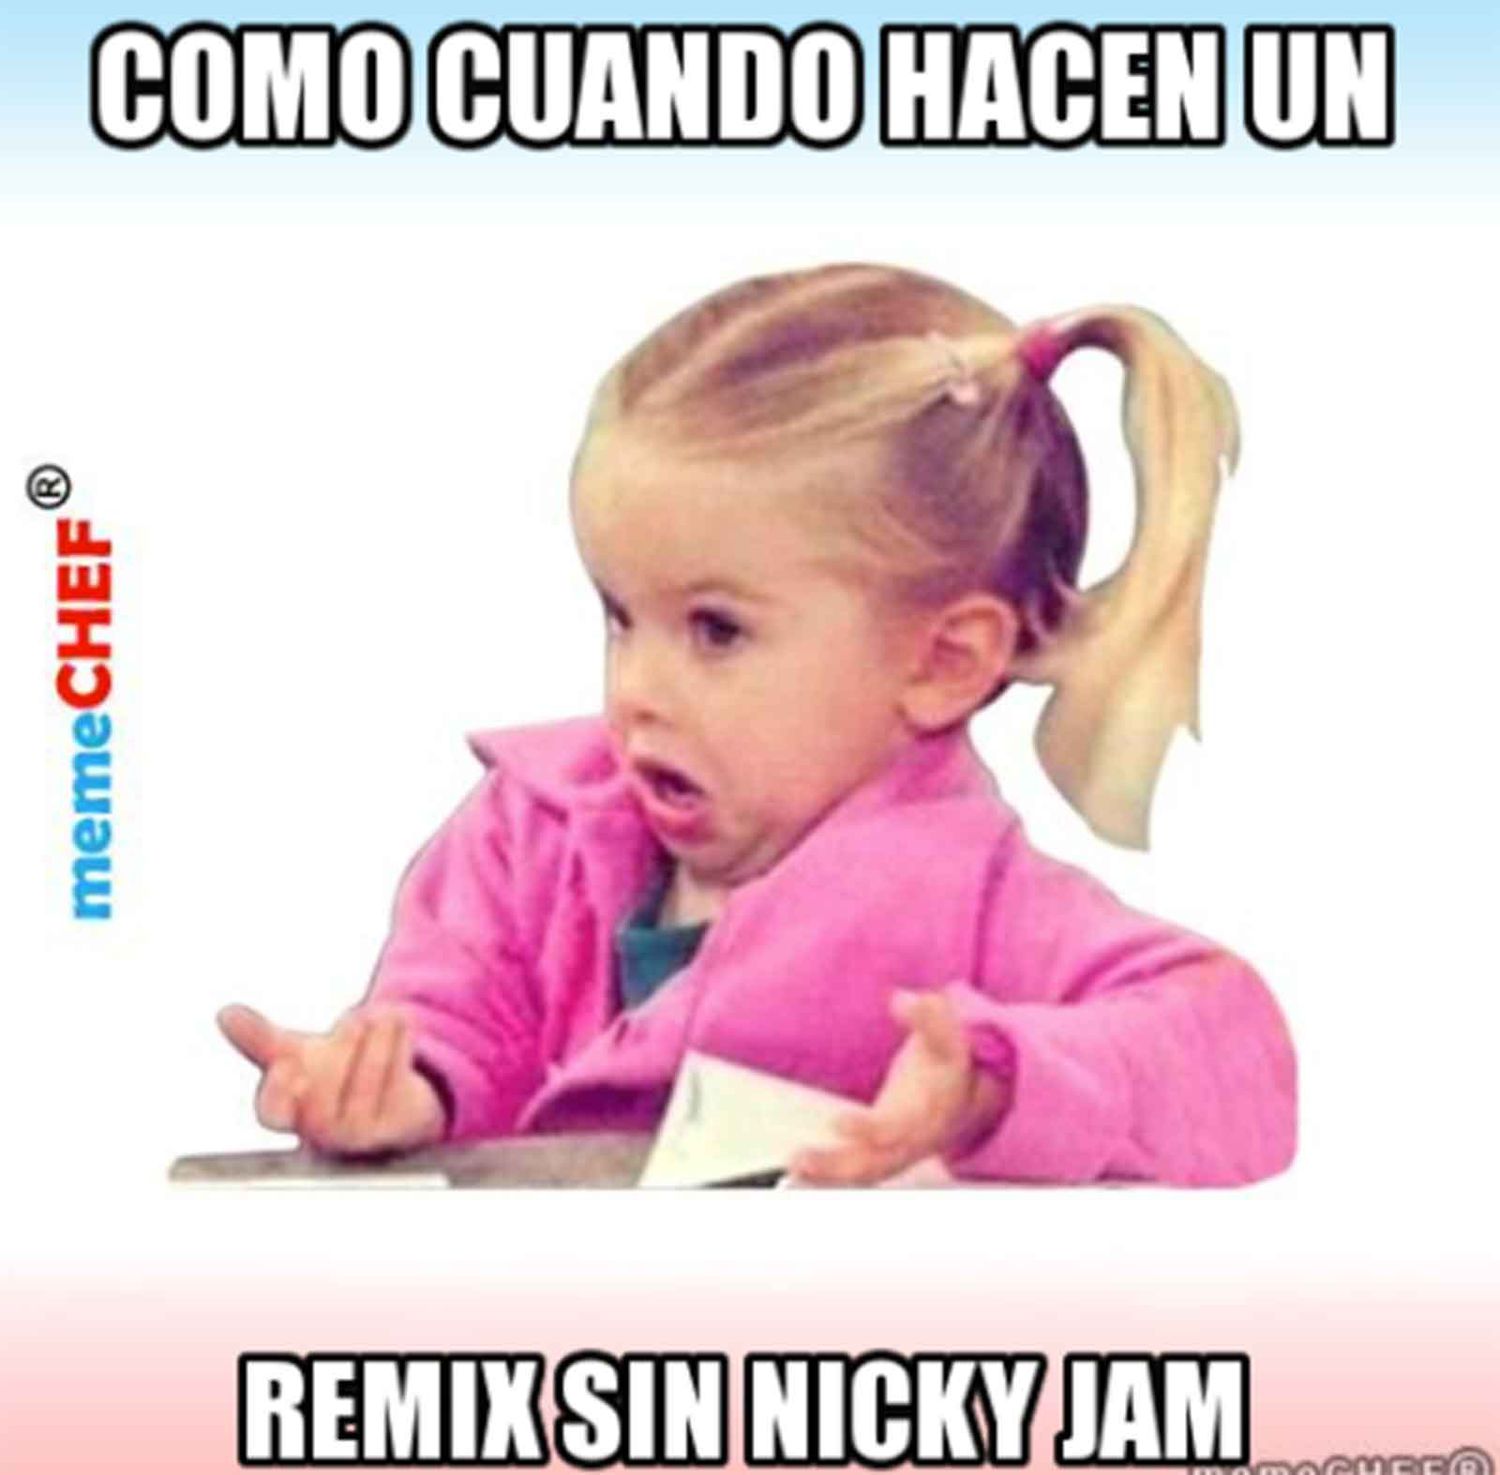 Nicky Jam